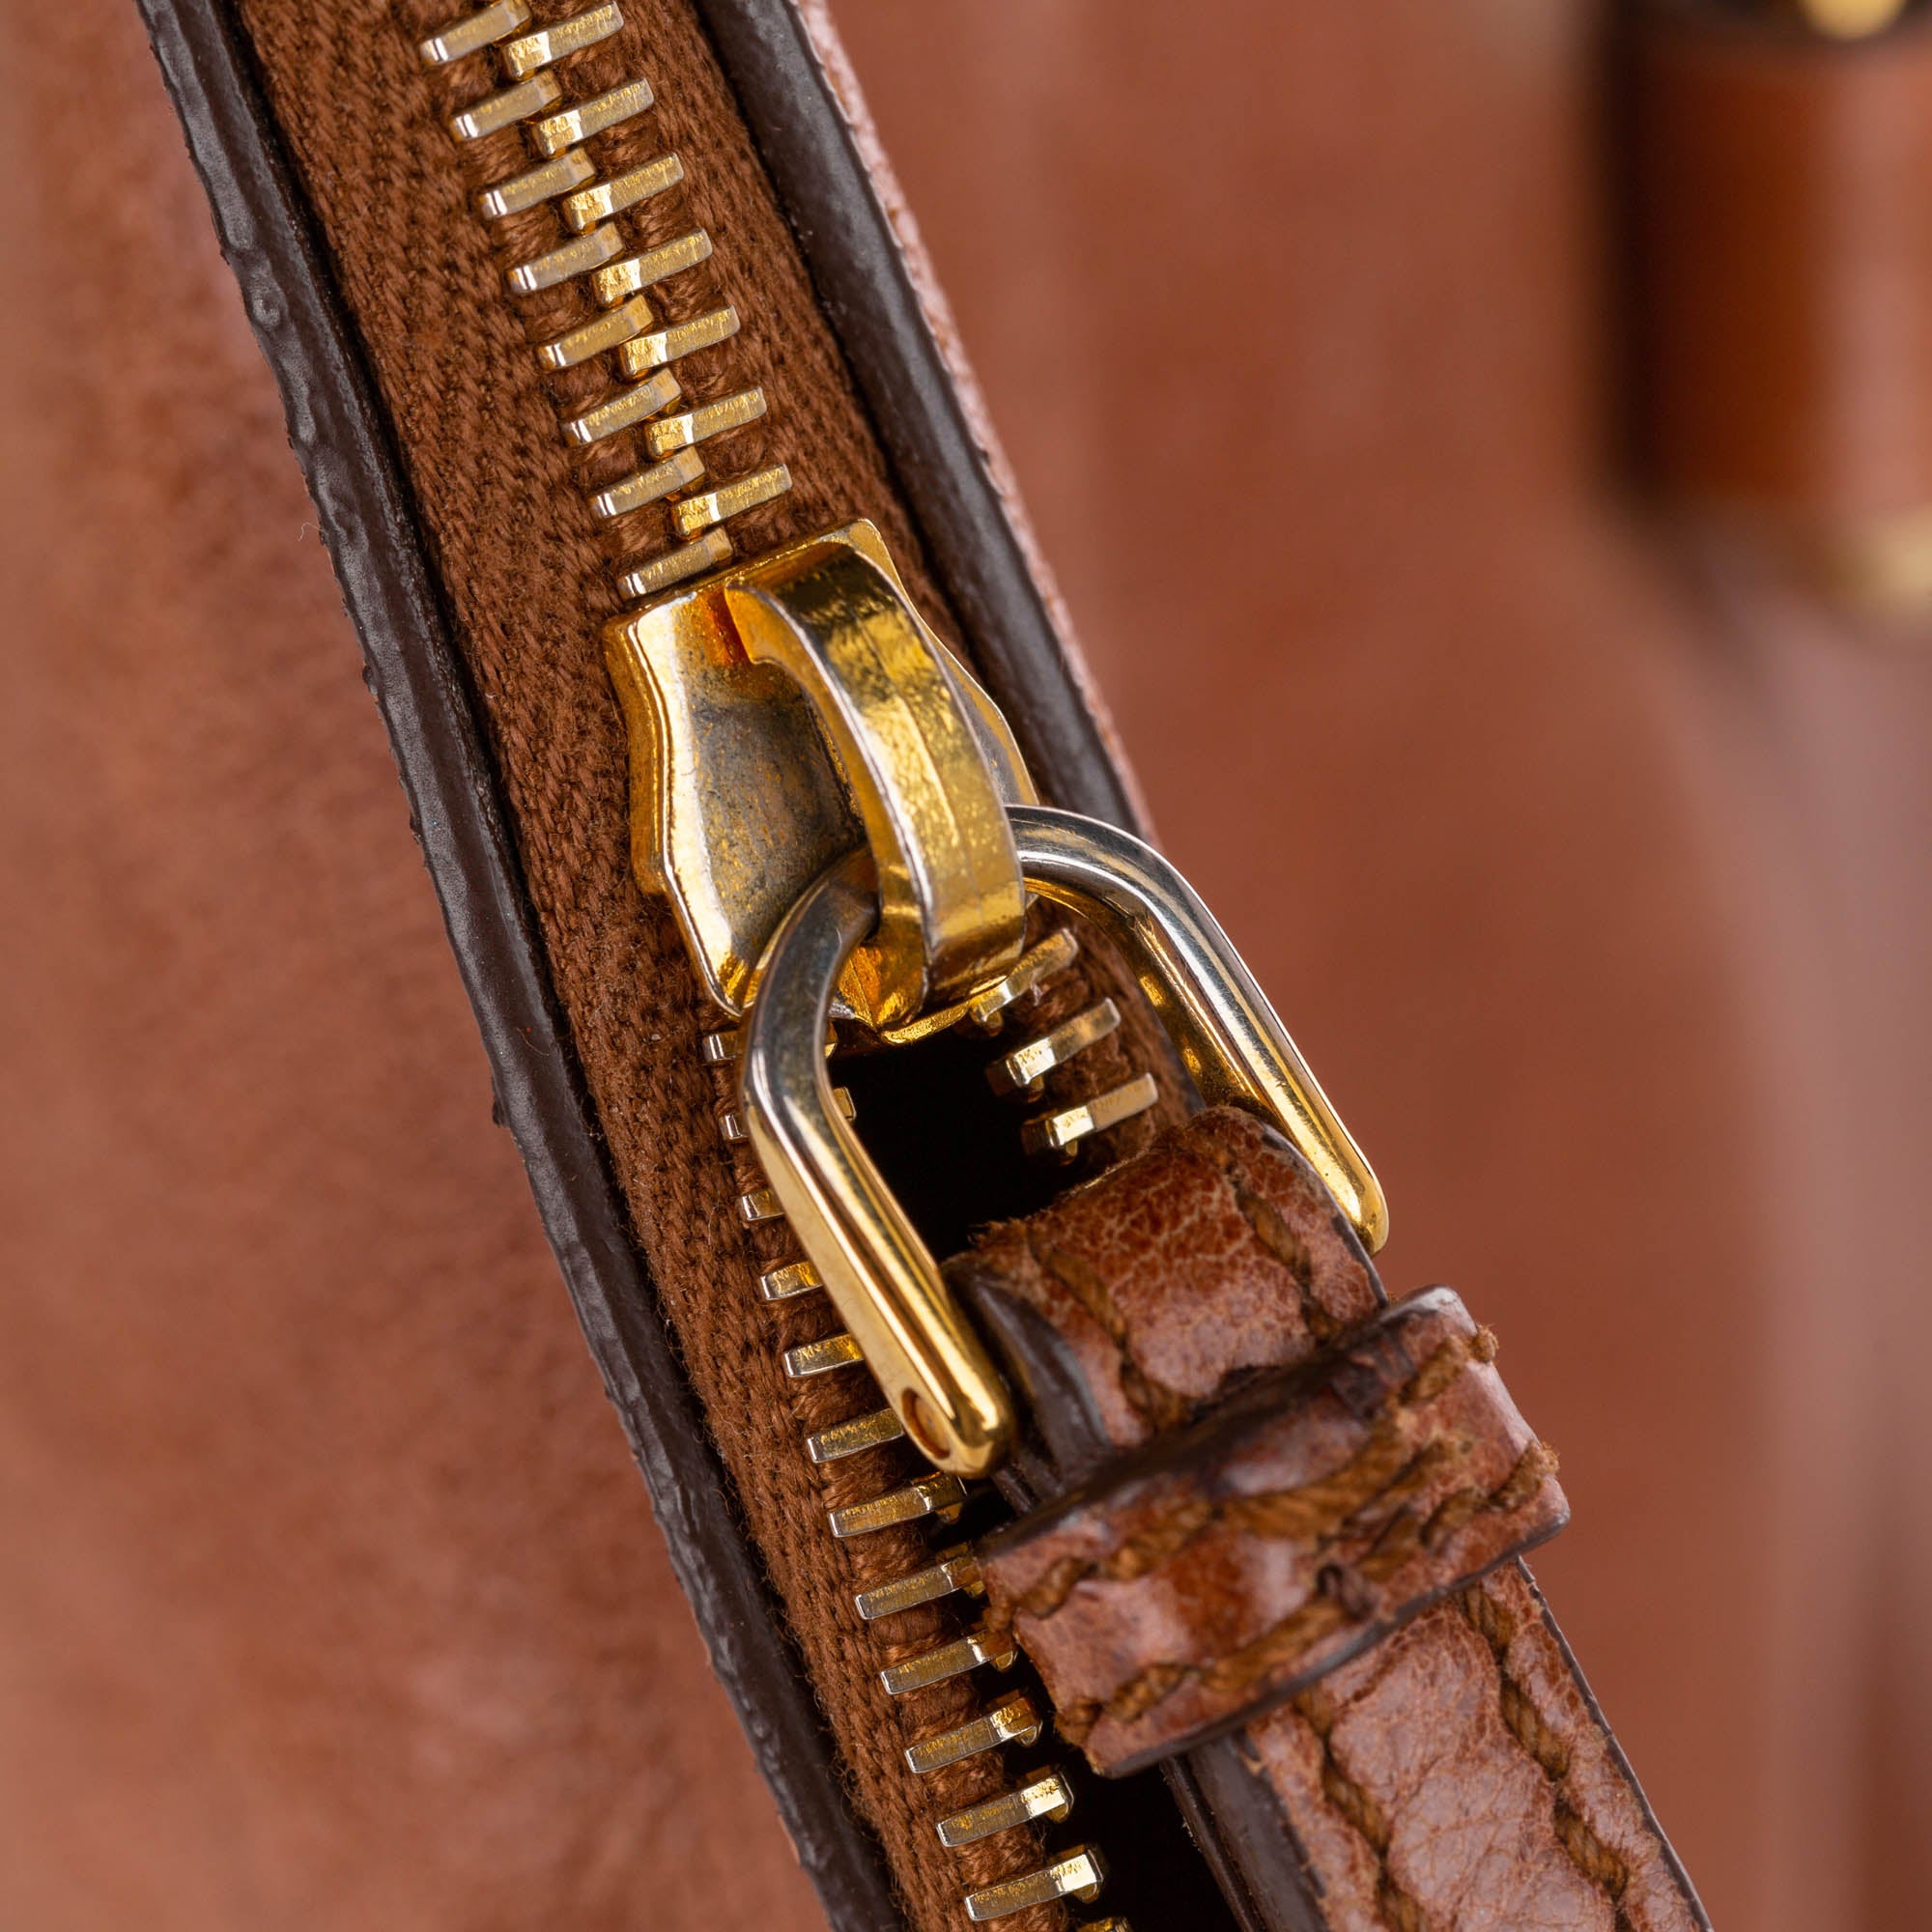 Miu Miu By Prada Vitello Lux Brown Leather Satchel Handbag